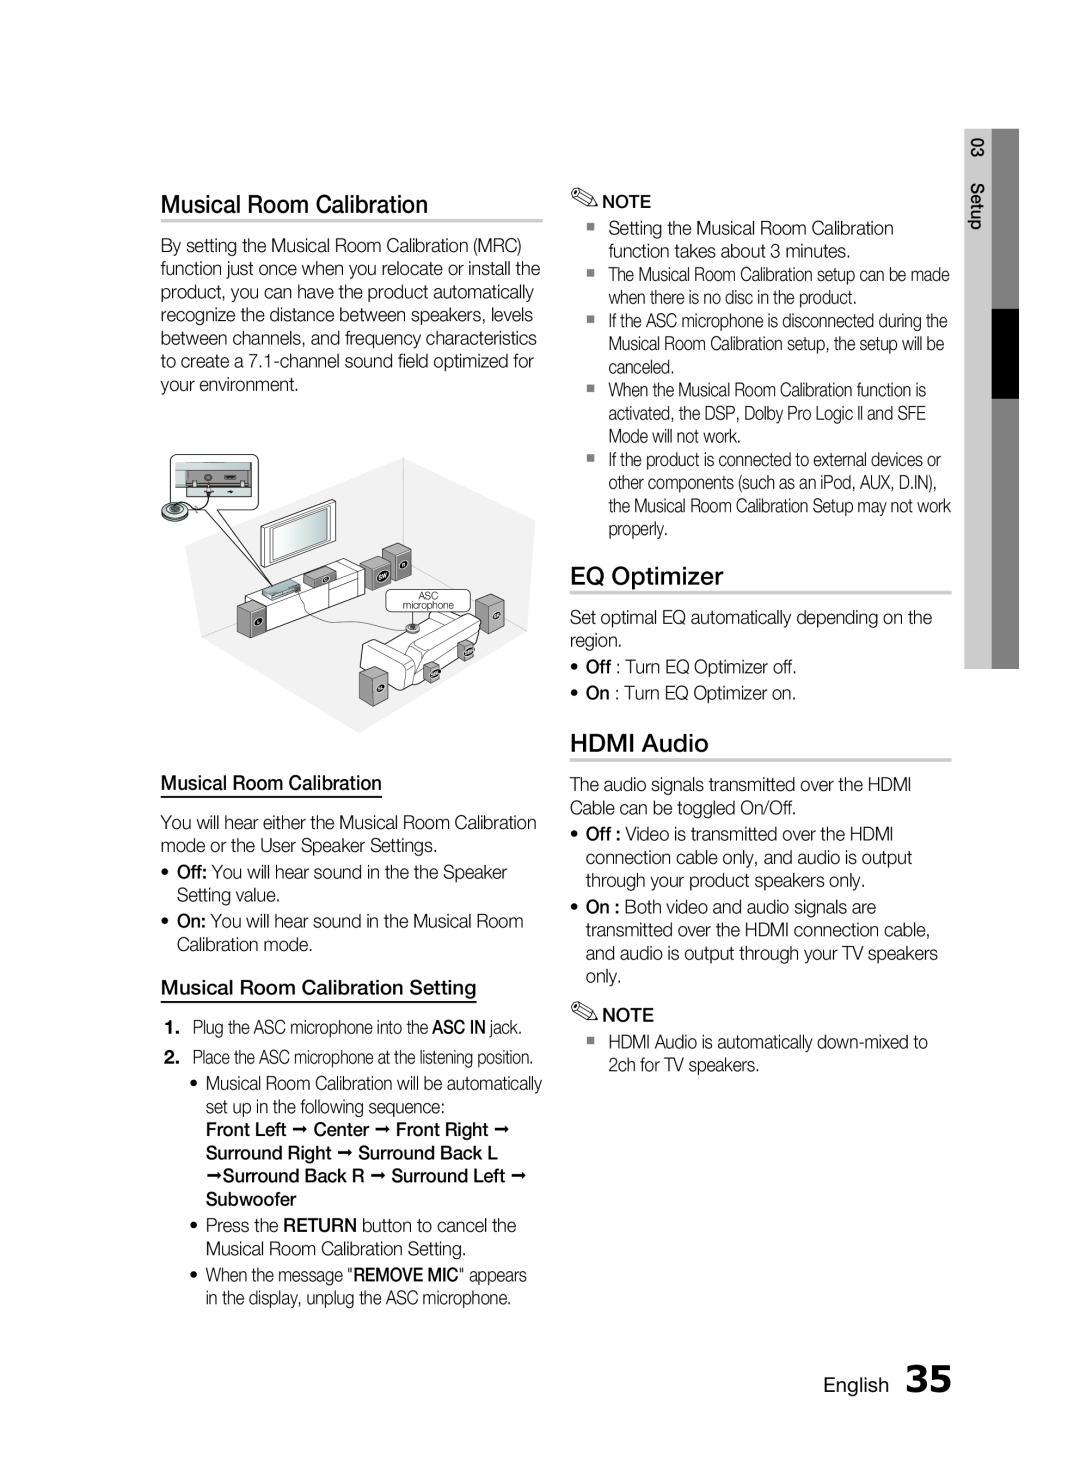 Samsung HT-C6730W, AH68-02290S user manual EQ Optimizer, HDMI Audio, Musical Room Calibration Setting, English 